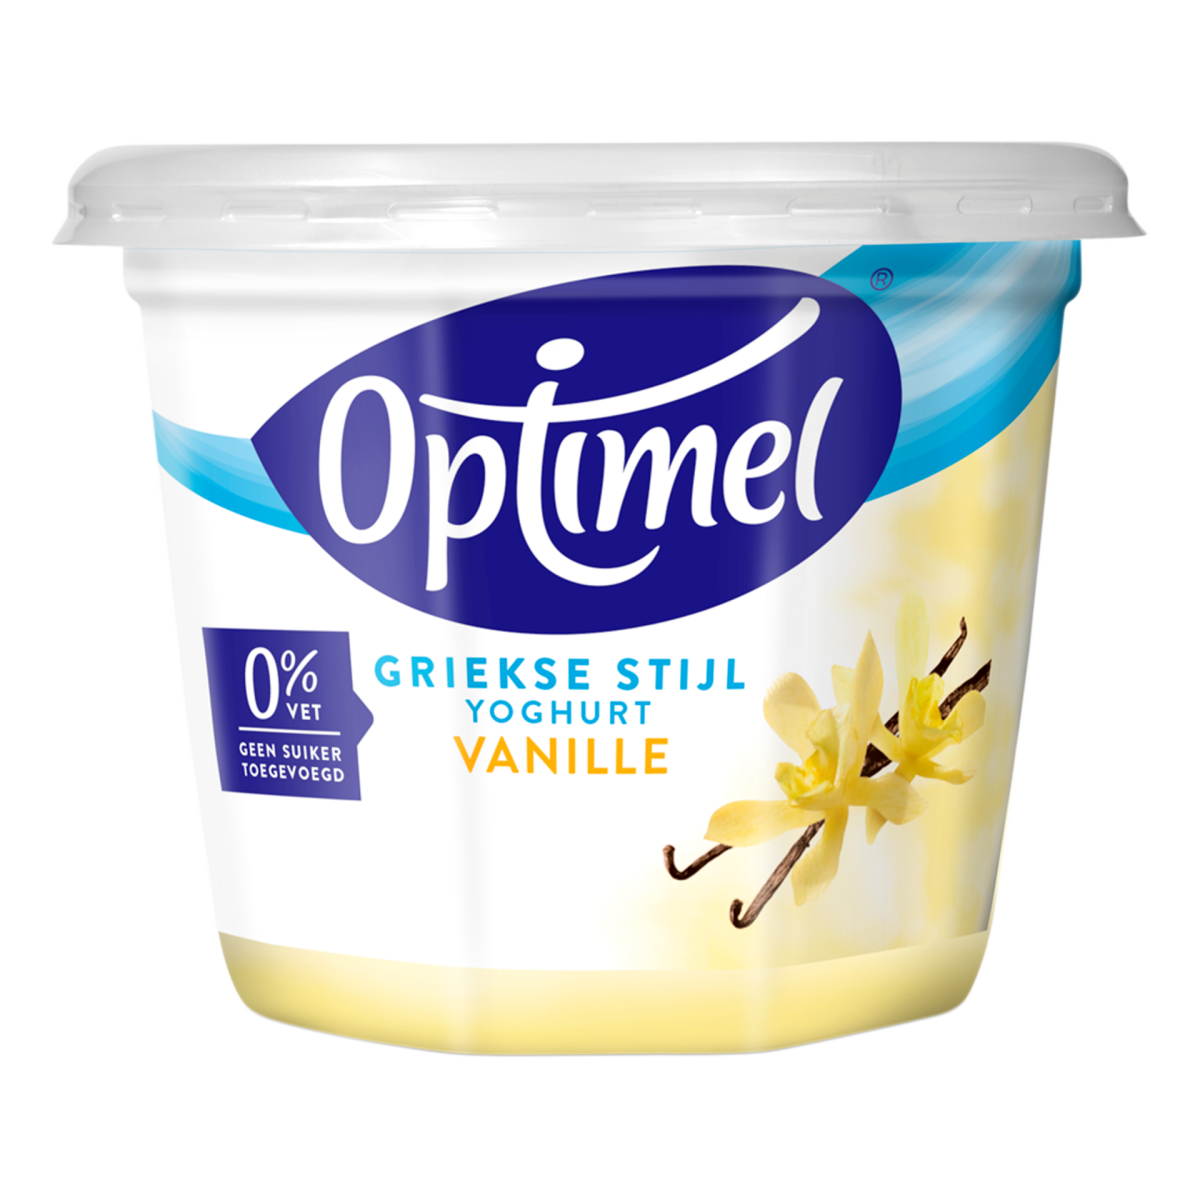 Optimel Yoghurt Griekse stijl vanille 0%  vet 450g